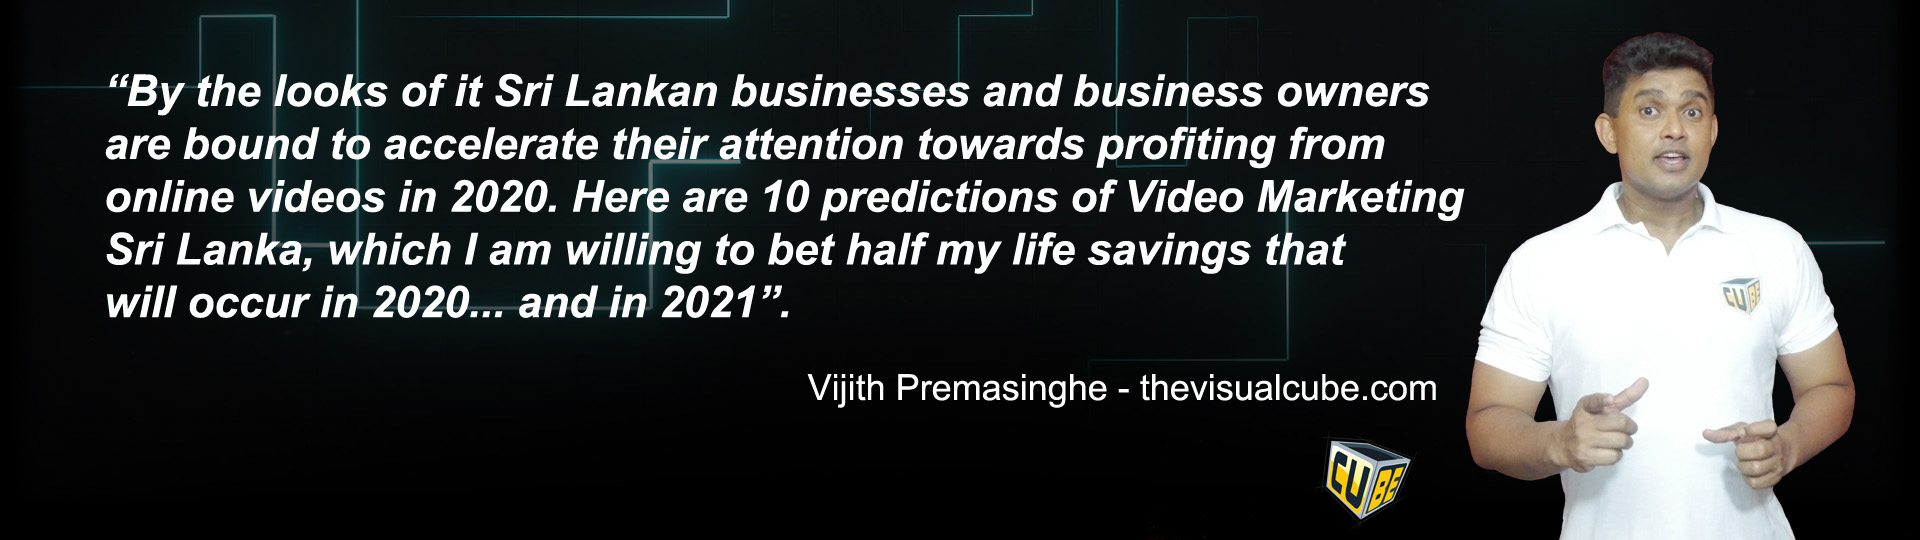 video marketing quotes vijith premasinghe quotes 2020 1